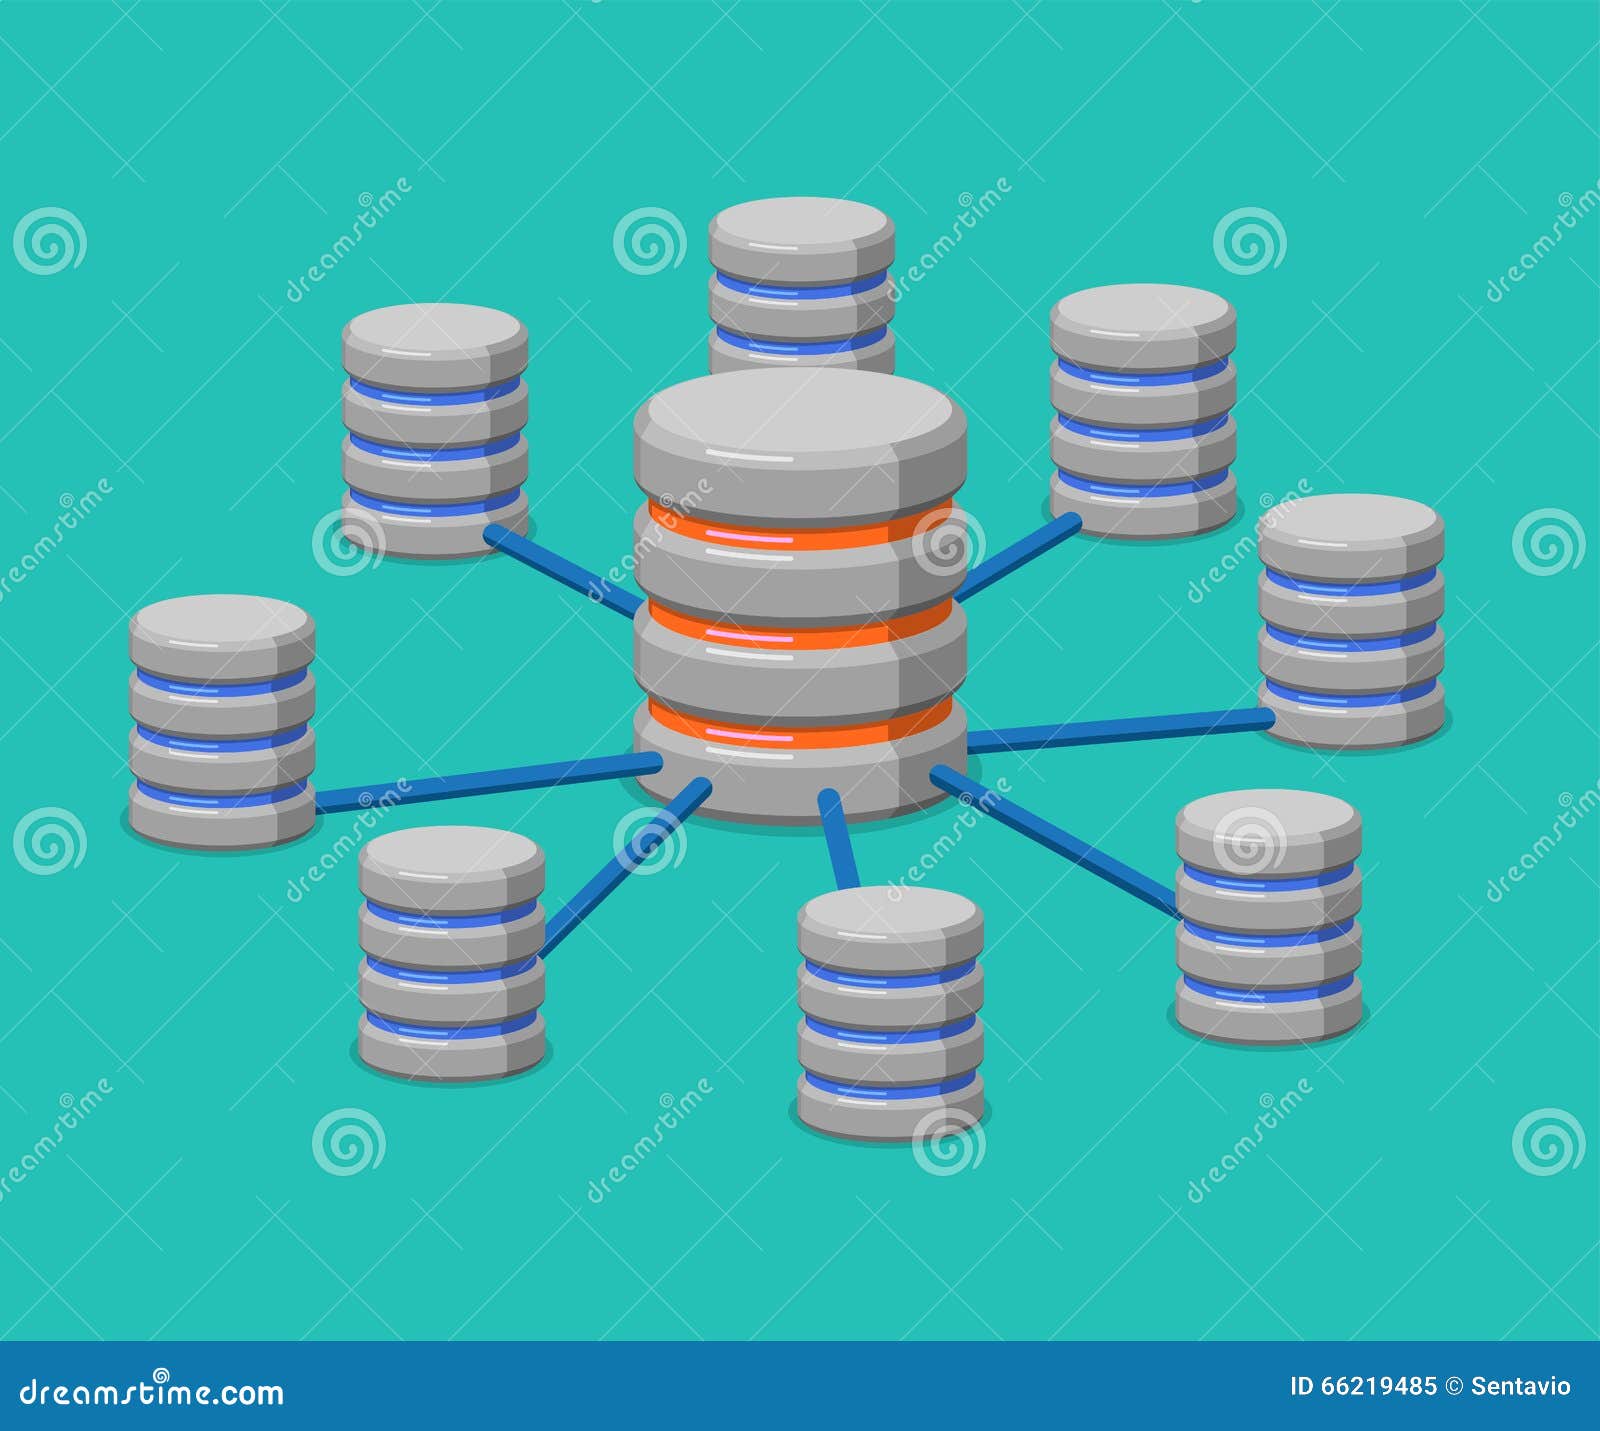 distributed data storage flat isometric  3d